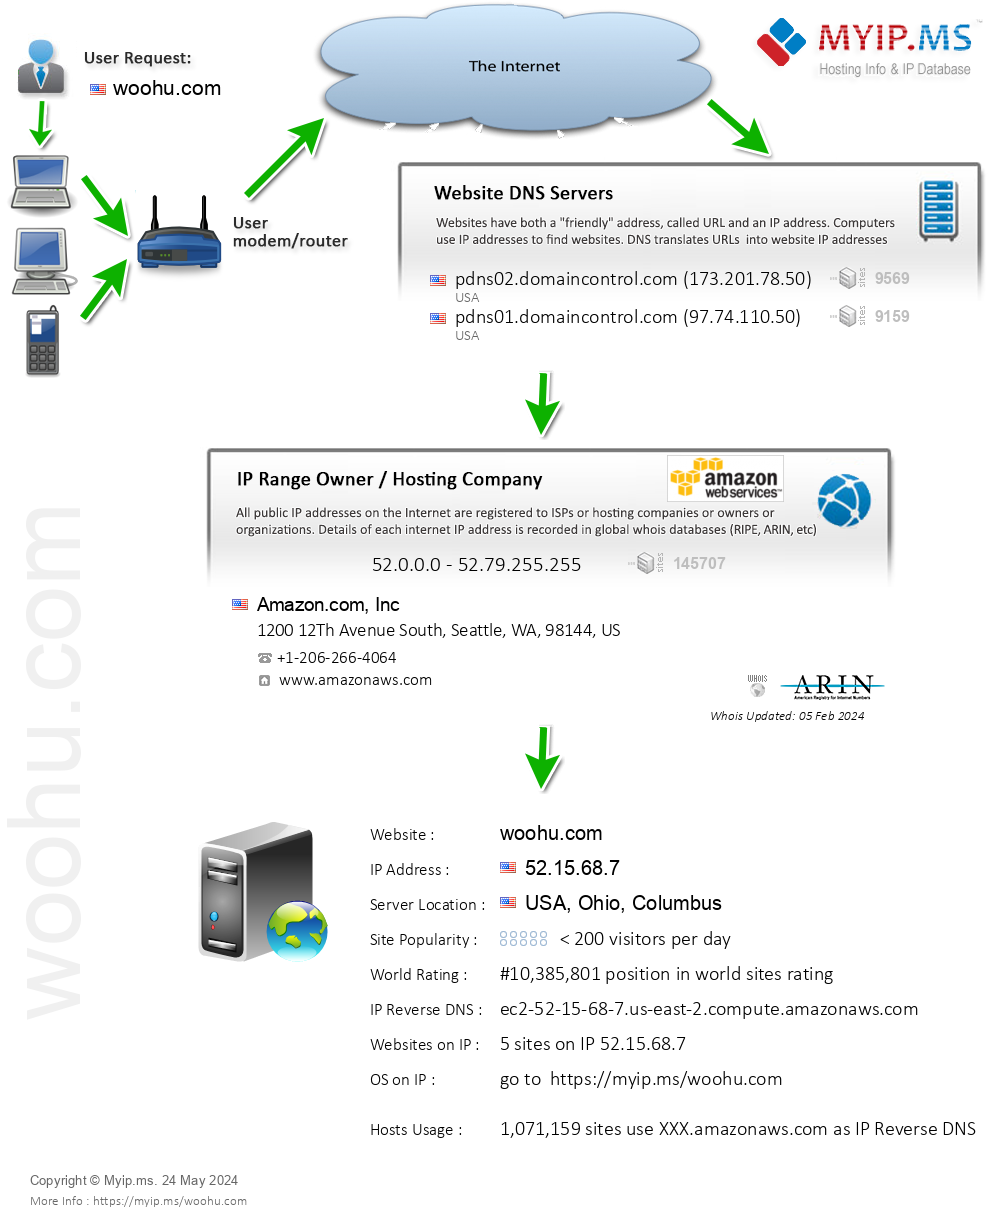 Woohu.com - Website Hosting Visual IP Diagram